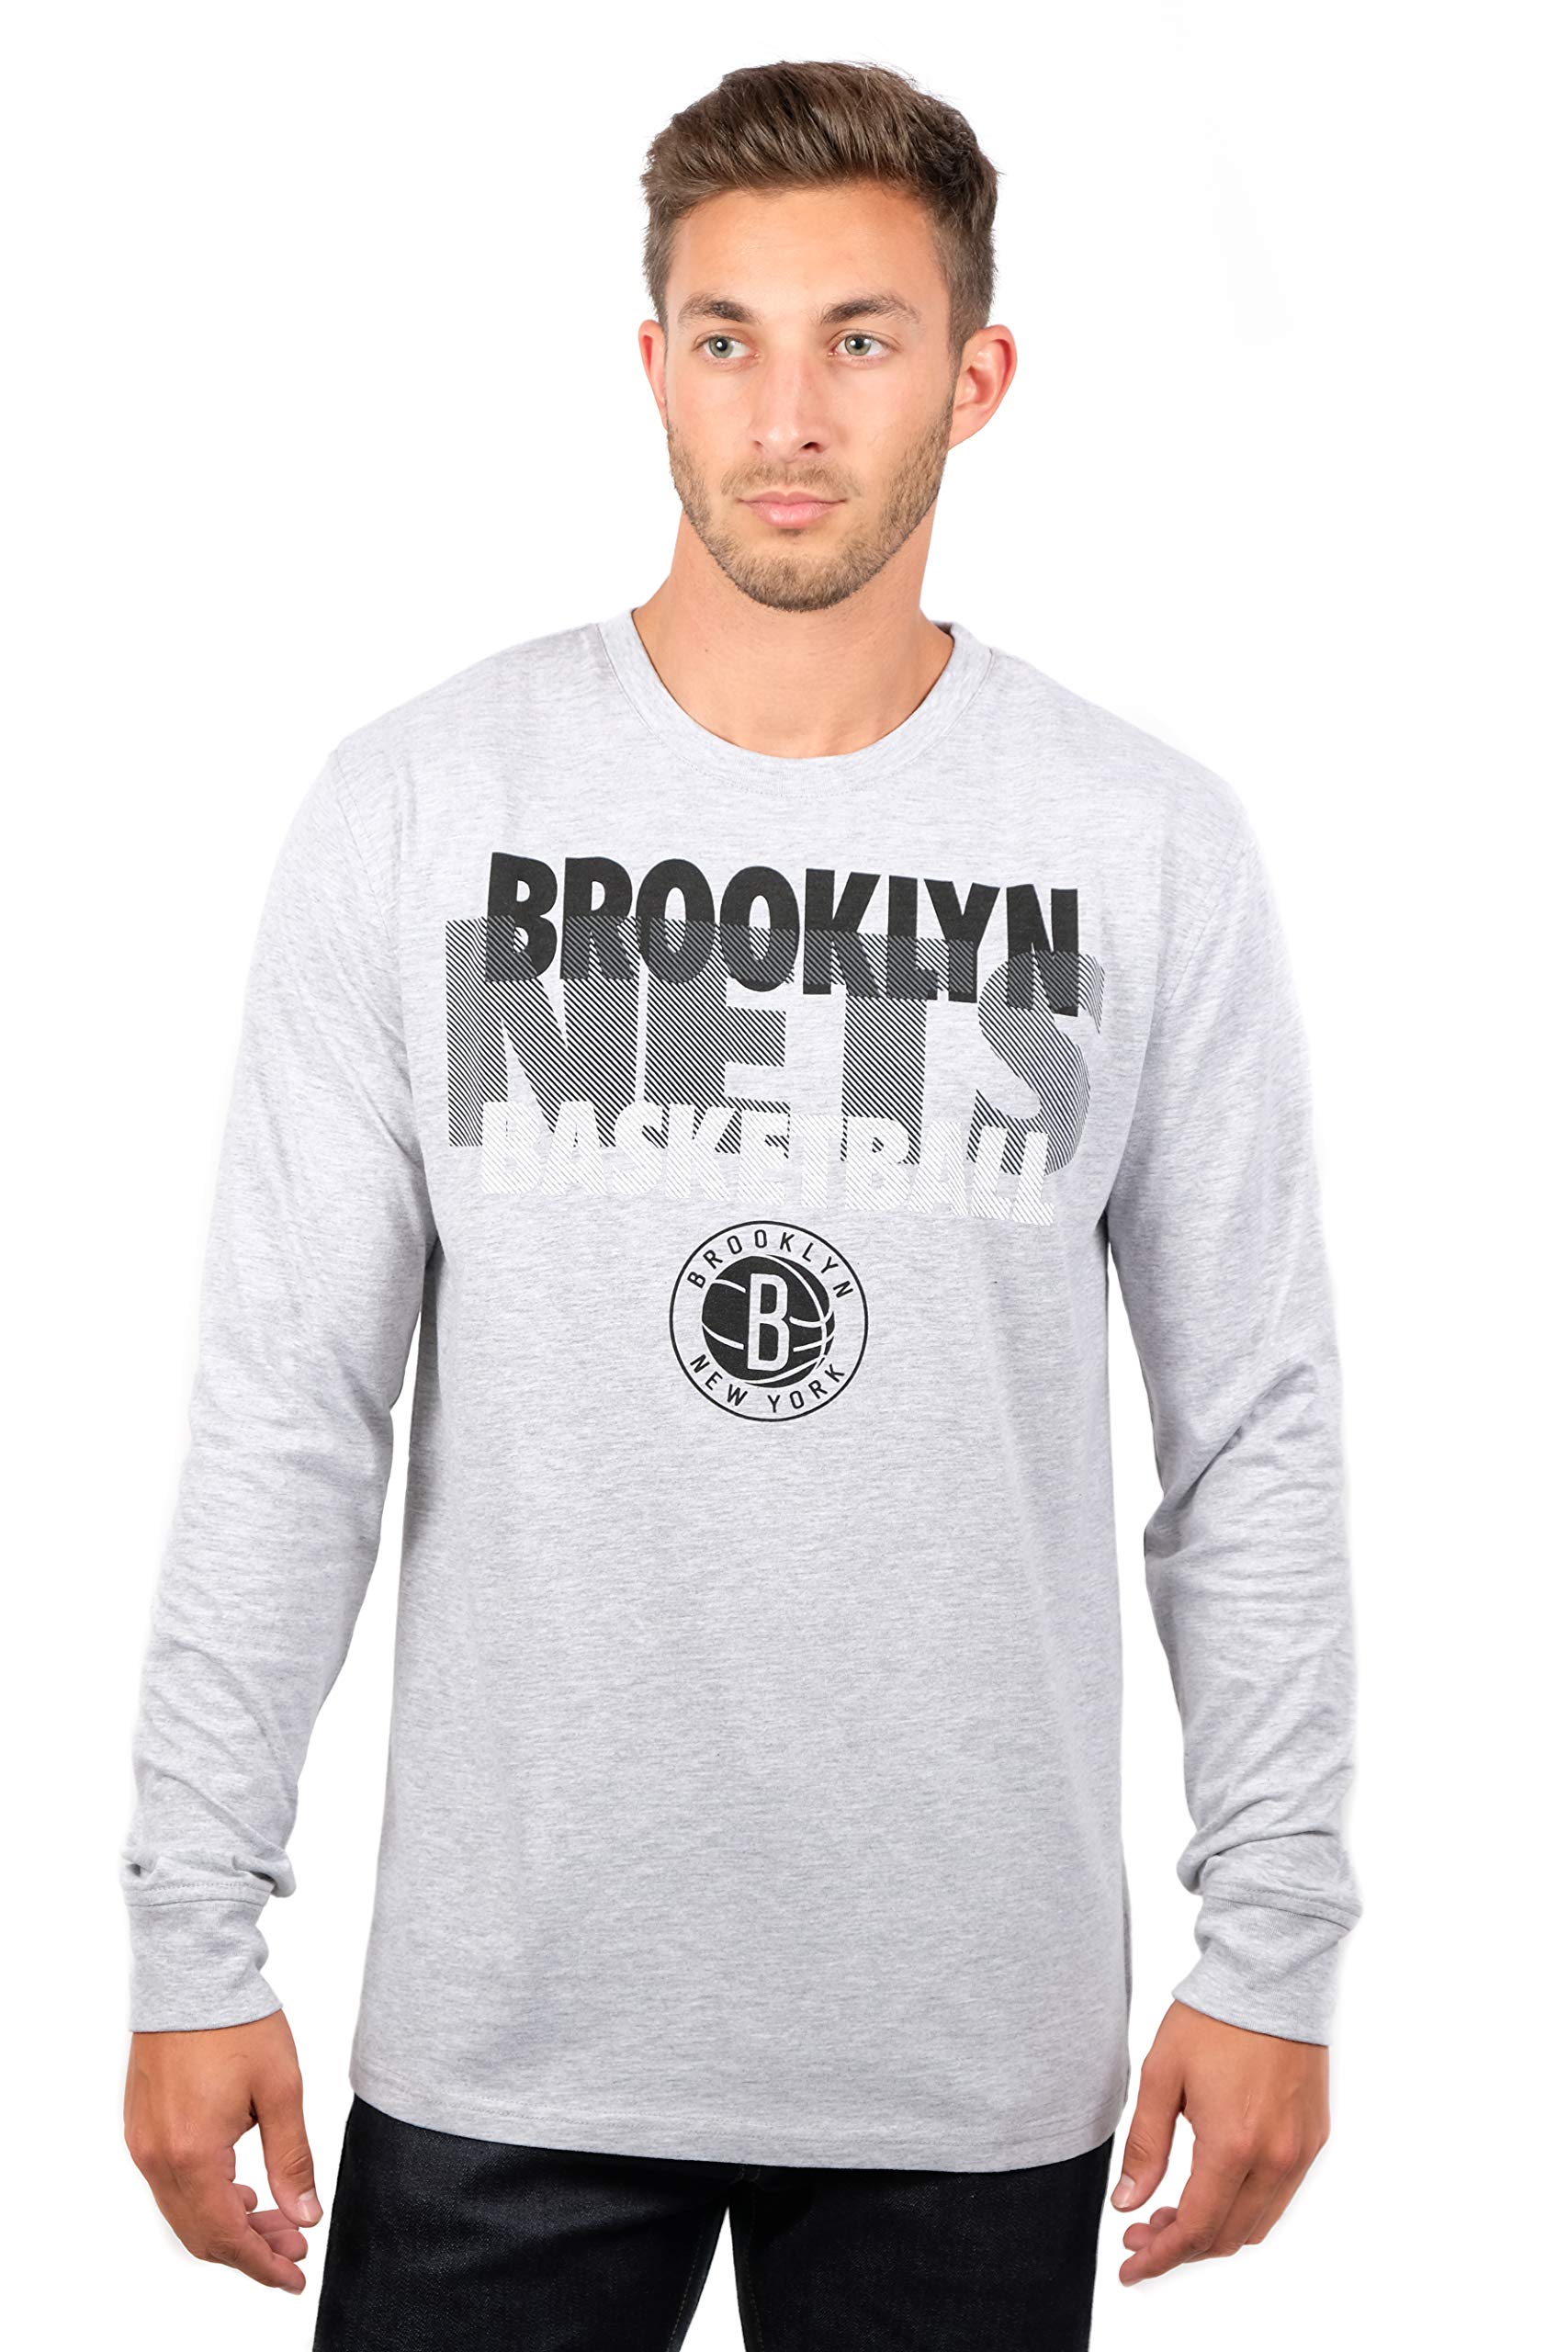 brooklyn nets t shirt amazon